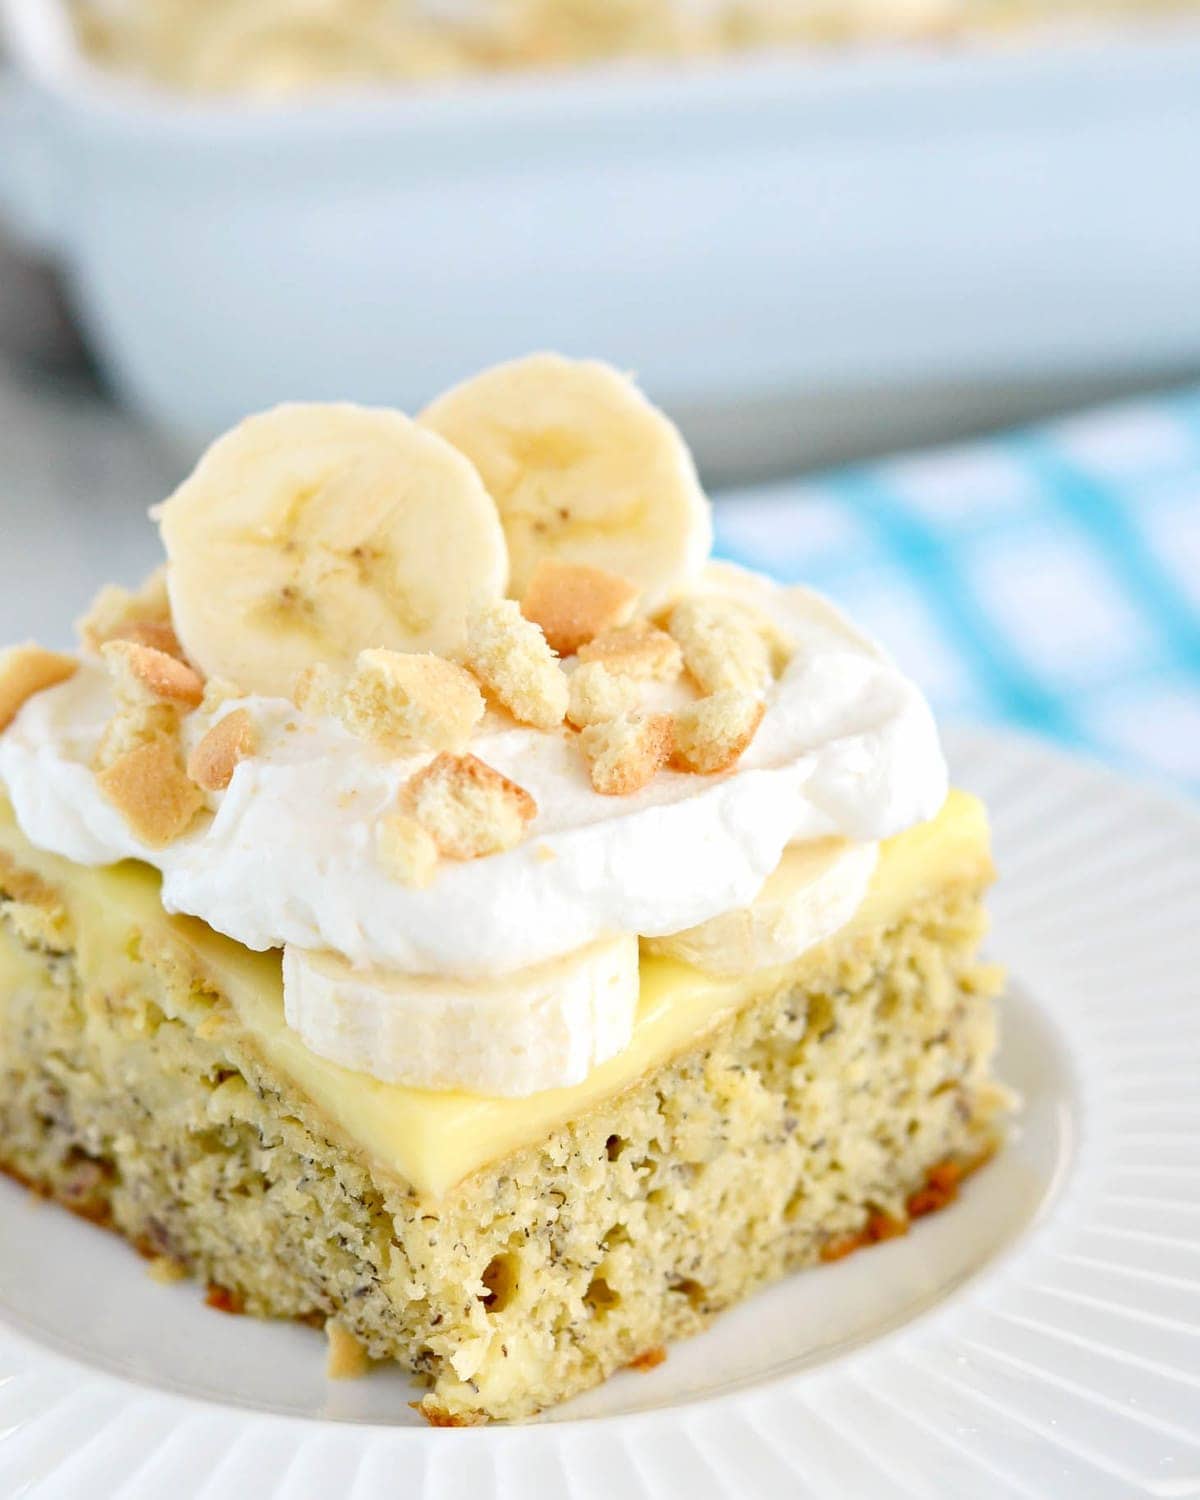 Banana Pudding Cake Recipe topped with whipped cream and fresh bananas.